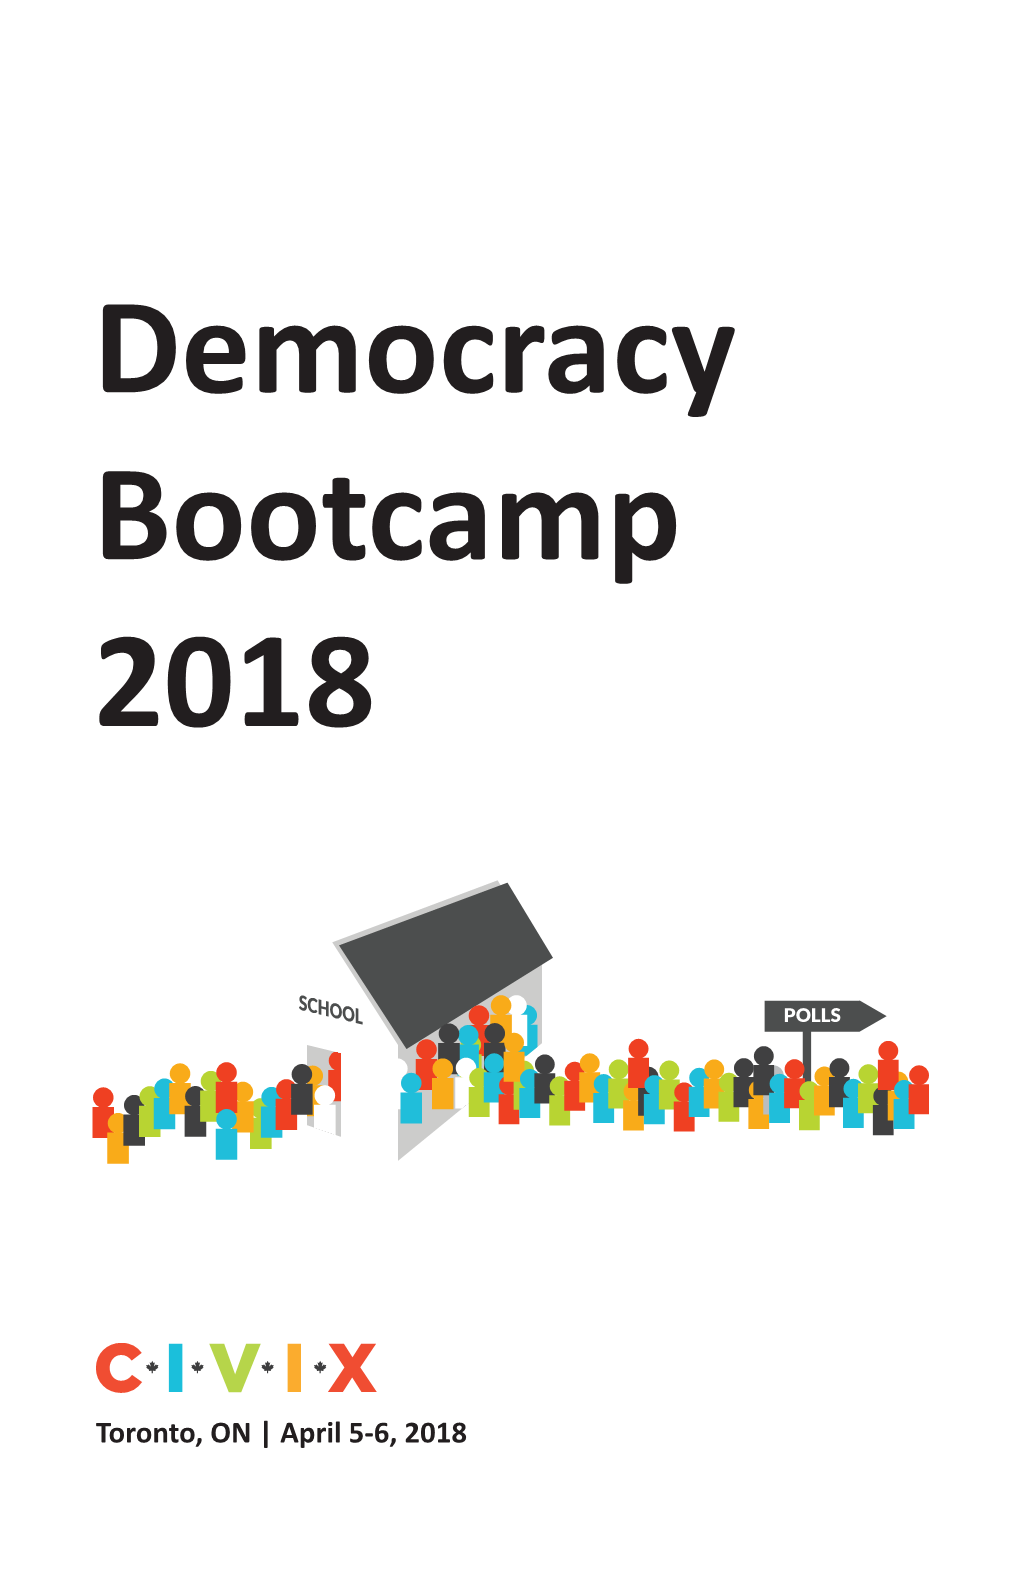 Democracy Bootcamp 2018